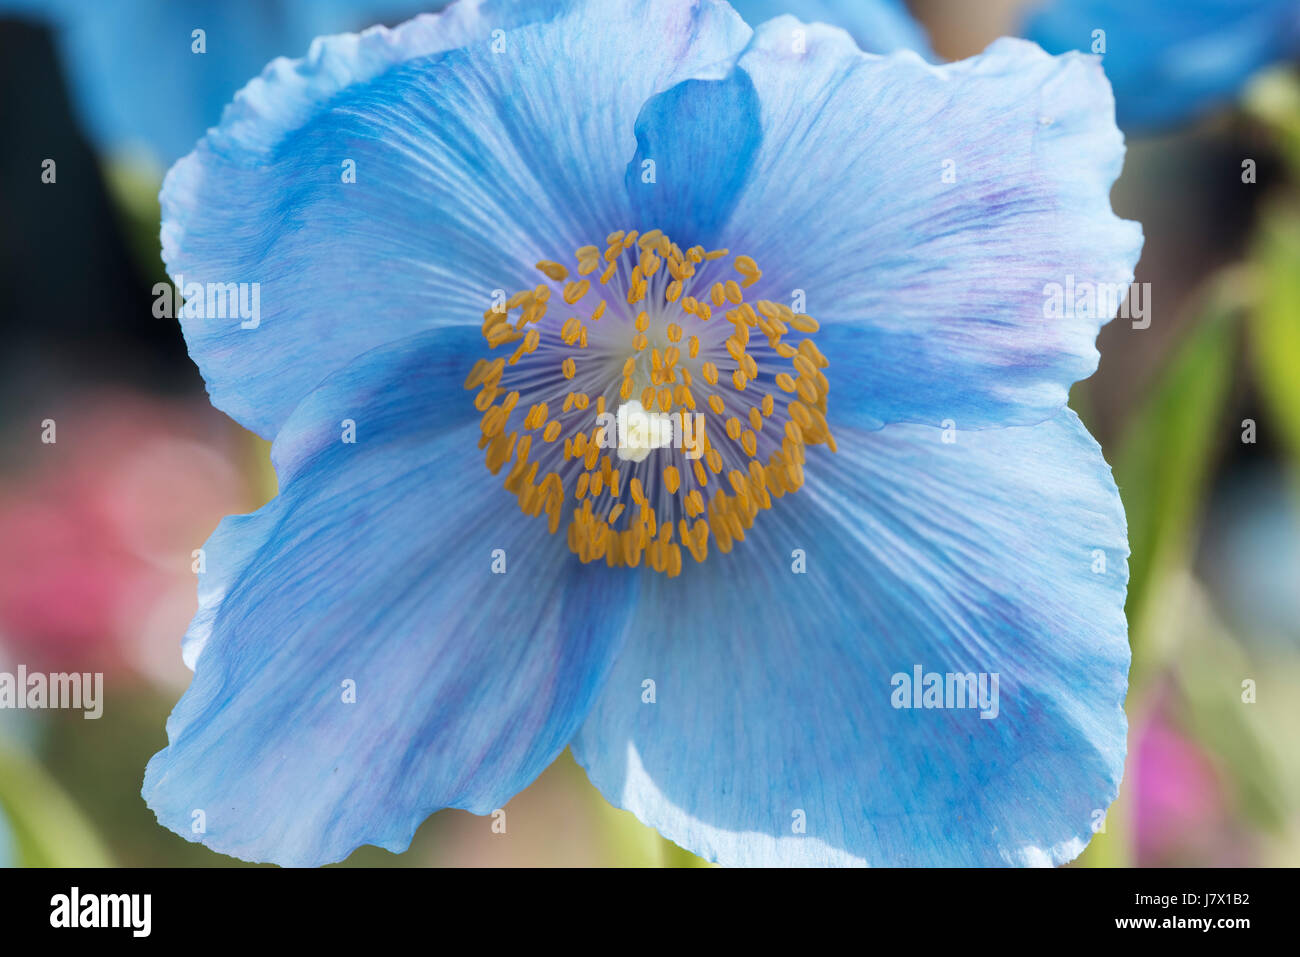 Meconopsis x sheldonii Lingholm. Blue Himalayan poppy Stock Photo